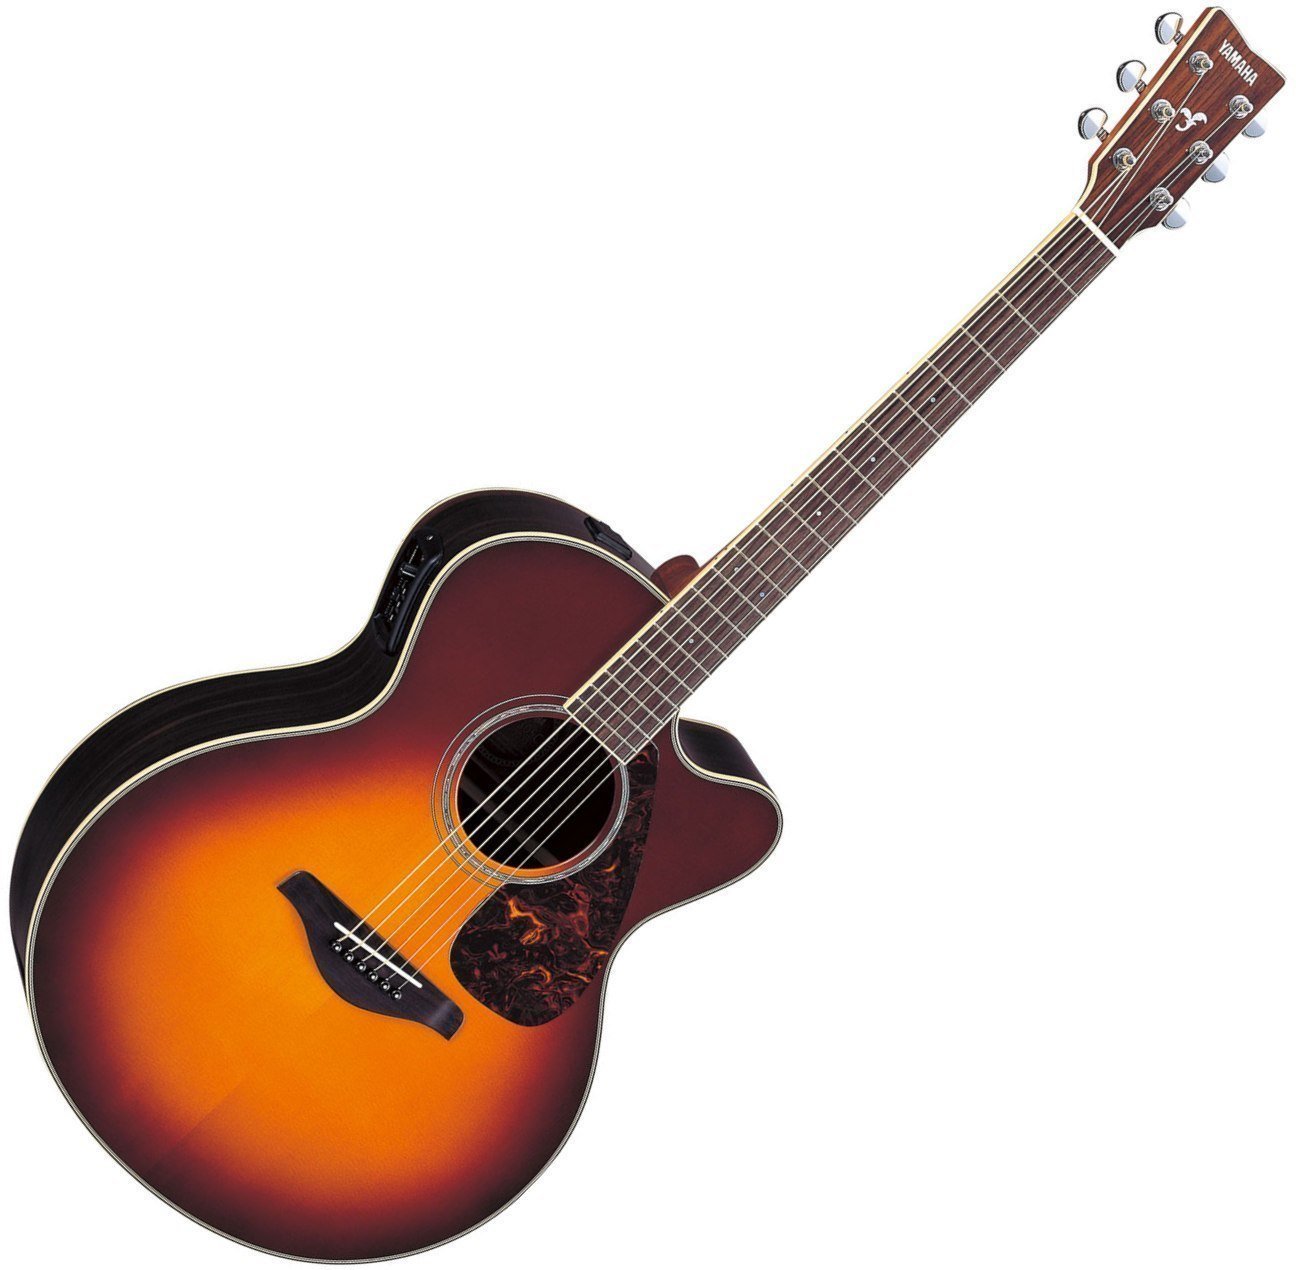 Jumbo elektro-akoestische gitaar Yamaha LJ 16 A.R.E. BS Brown Sunburst